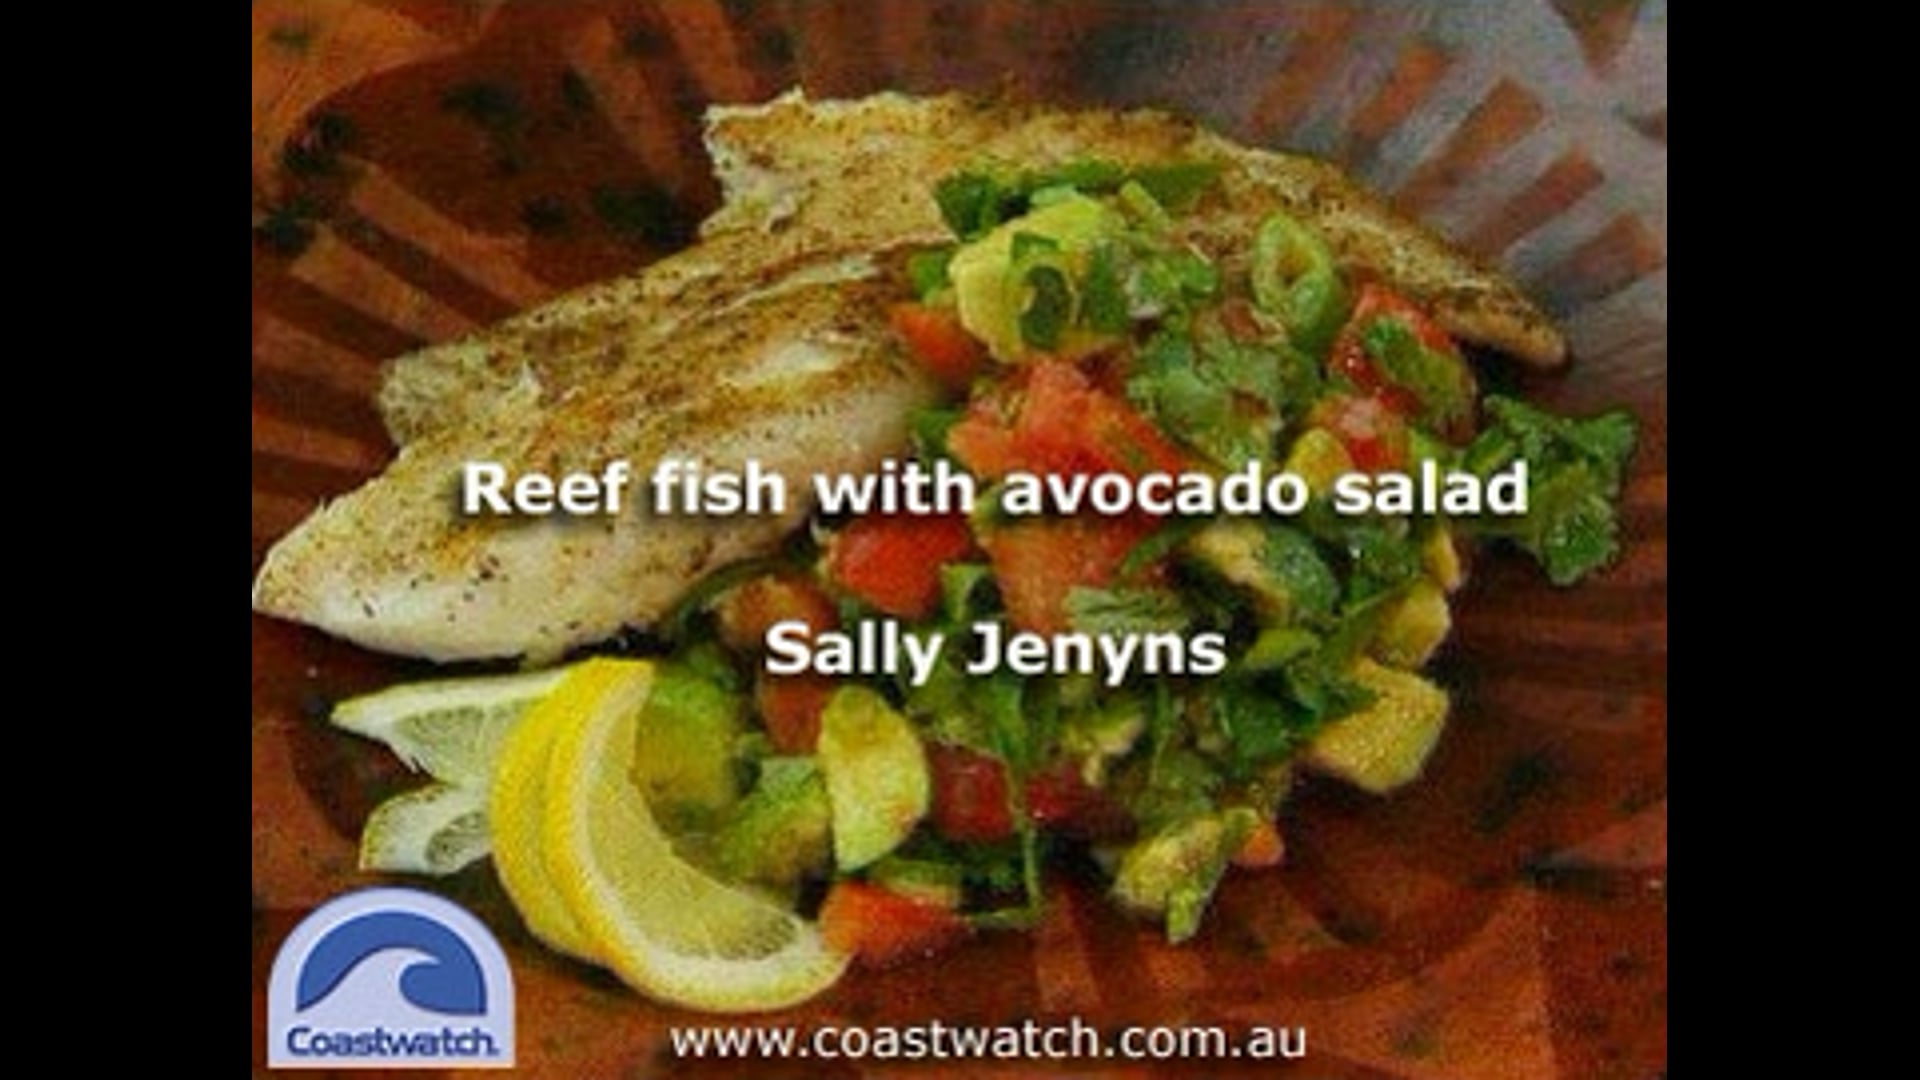 Reef fish with avocado salad